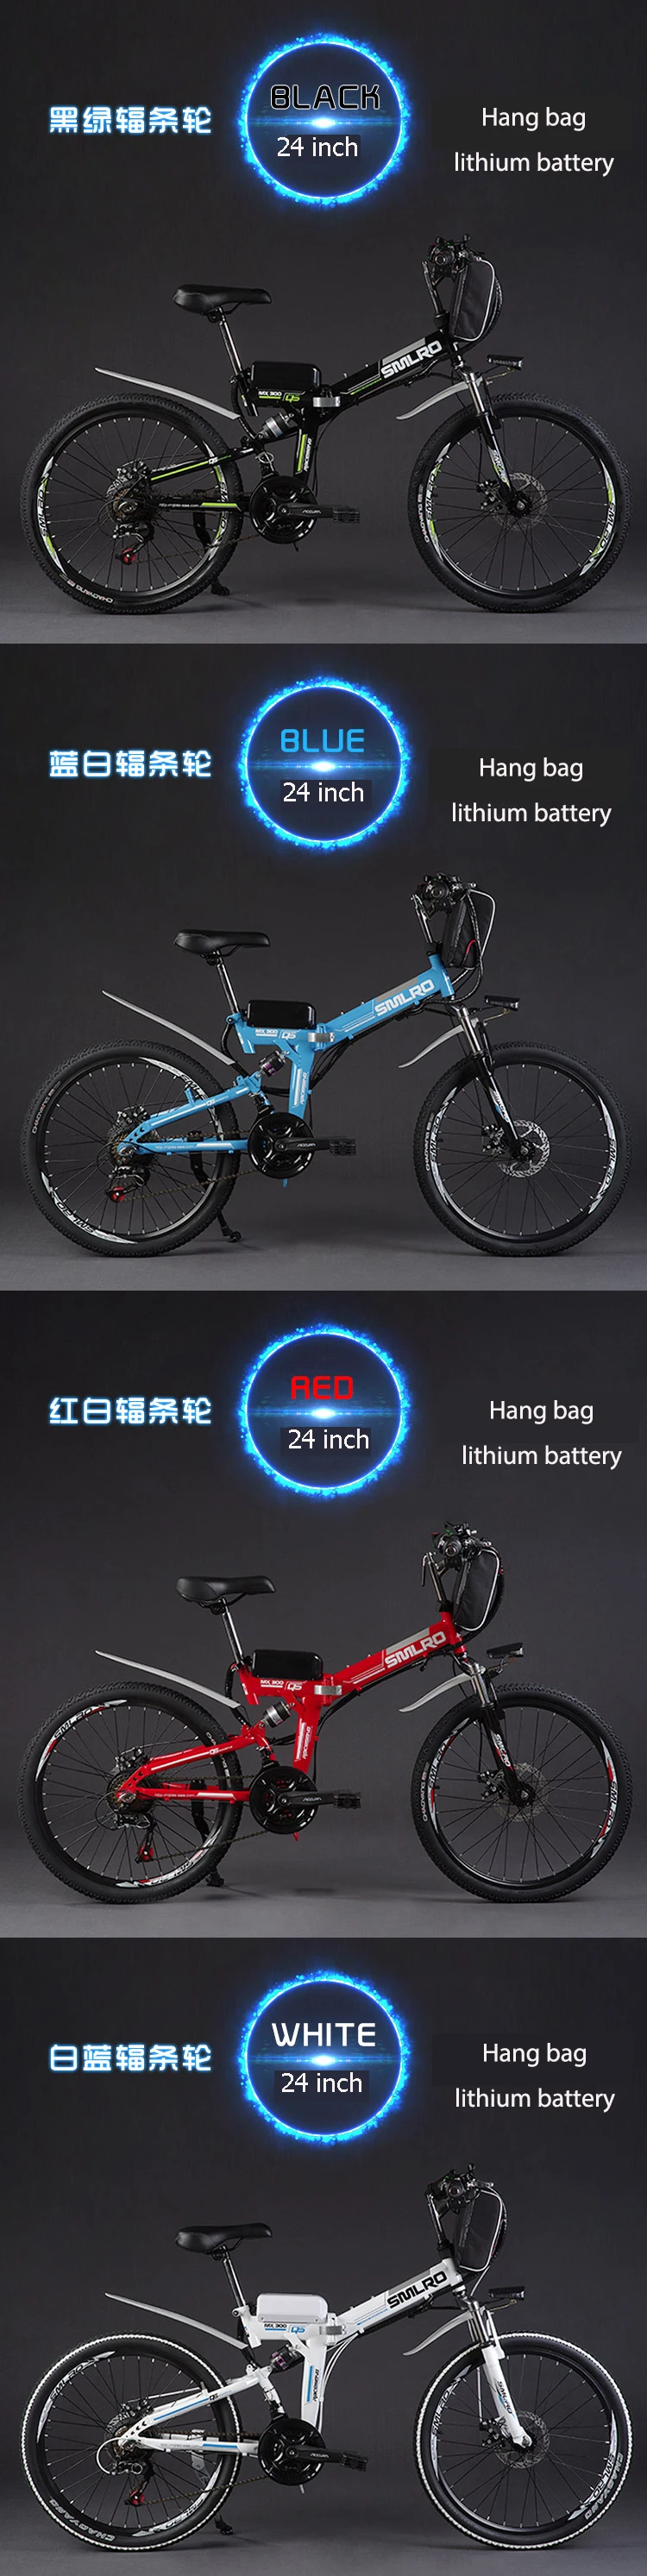 Flash Deal 24/26 inch electric mountain bike 48v lithium battery 500w high speed motor powerful folding frame Hybrid  ebike Traveling 2